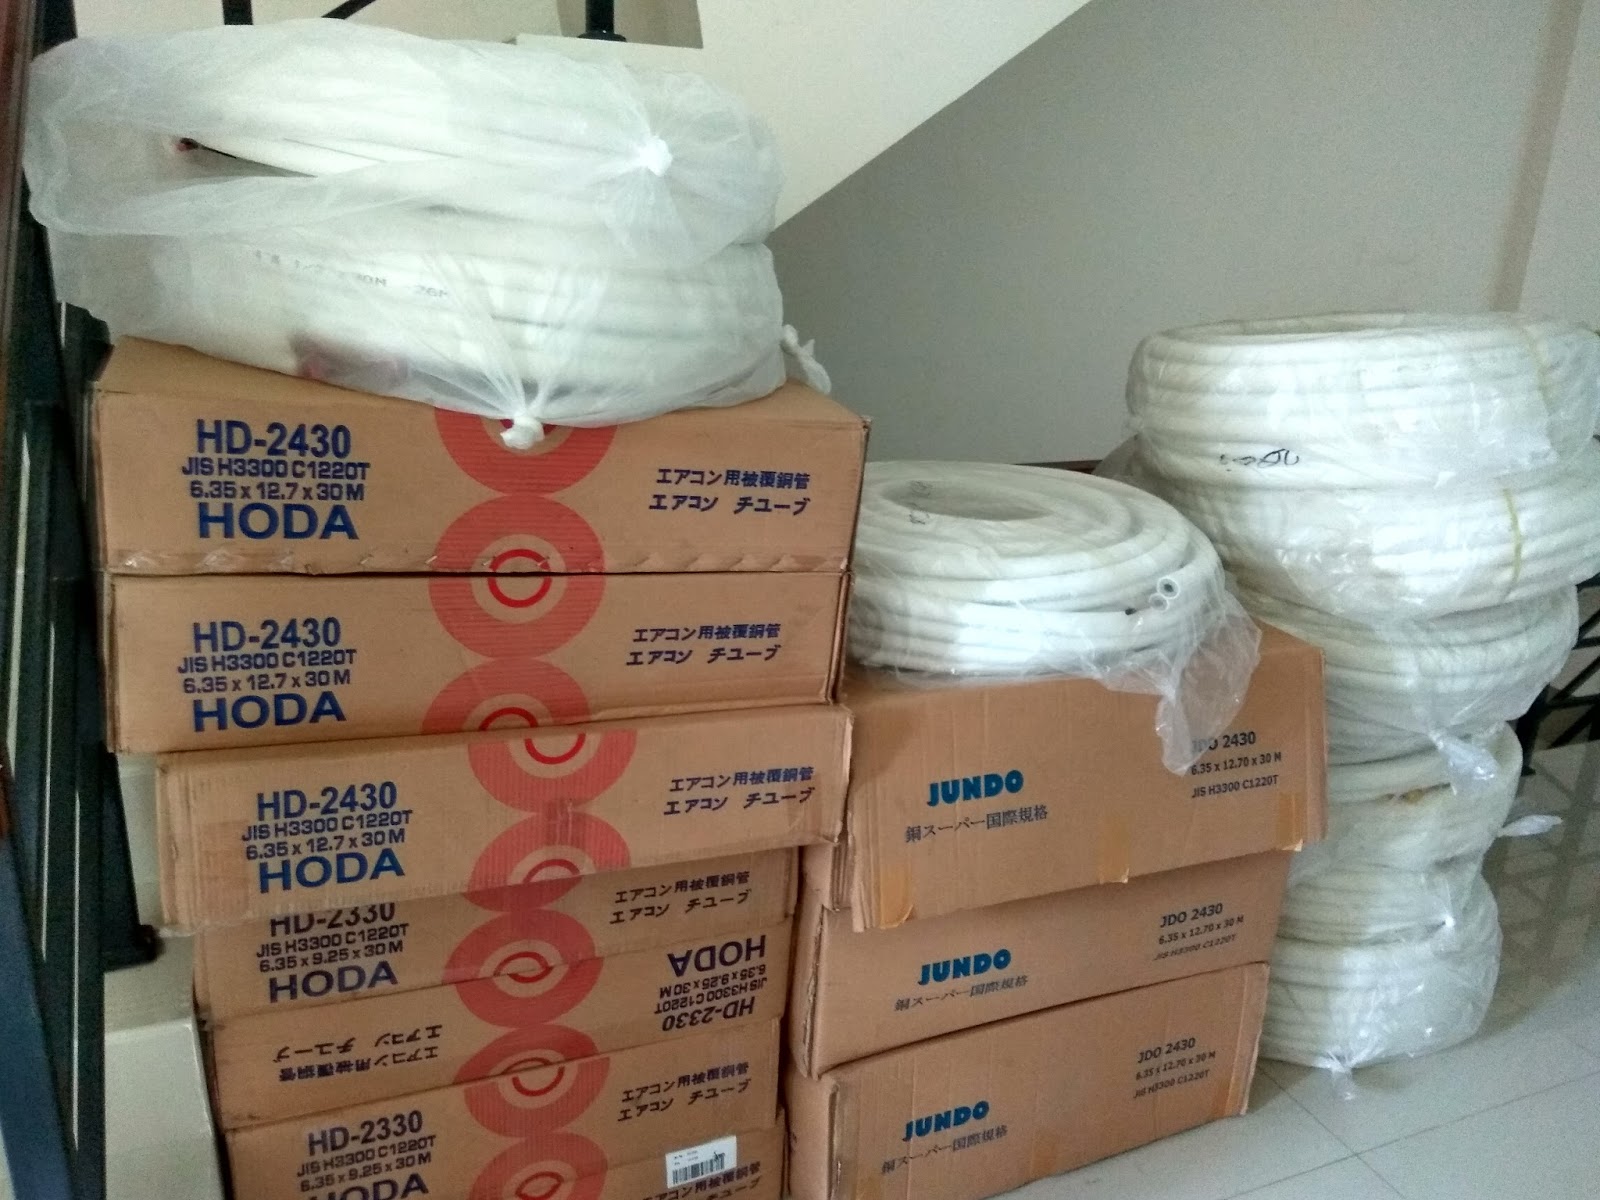 Harga Pipa Ac Merk Hoda Surabaya - Distributor Sparepart Ac Surabaya